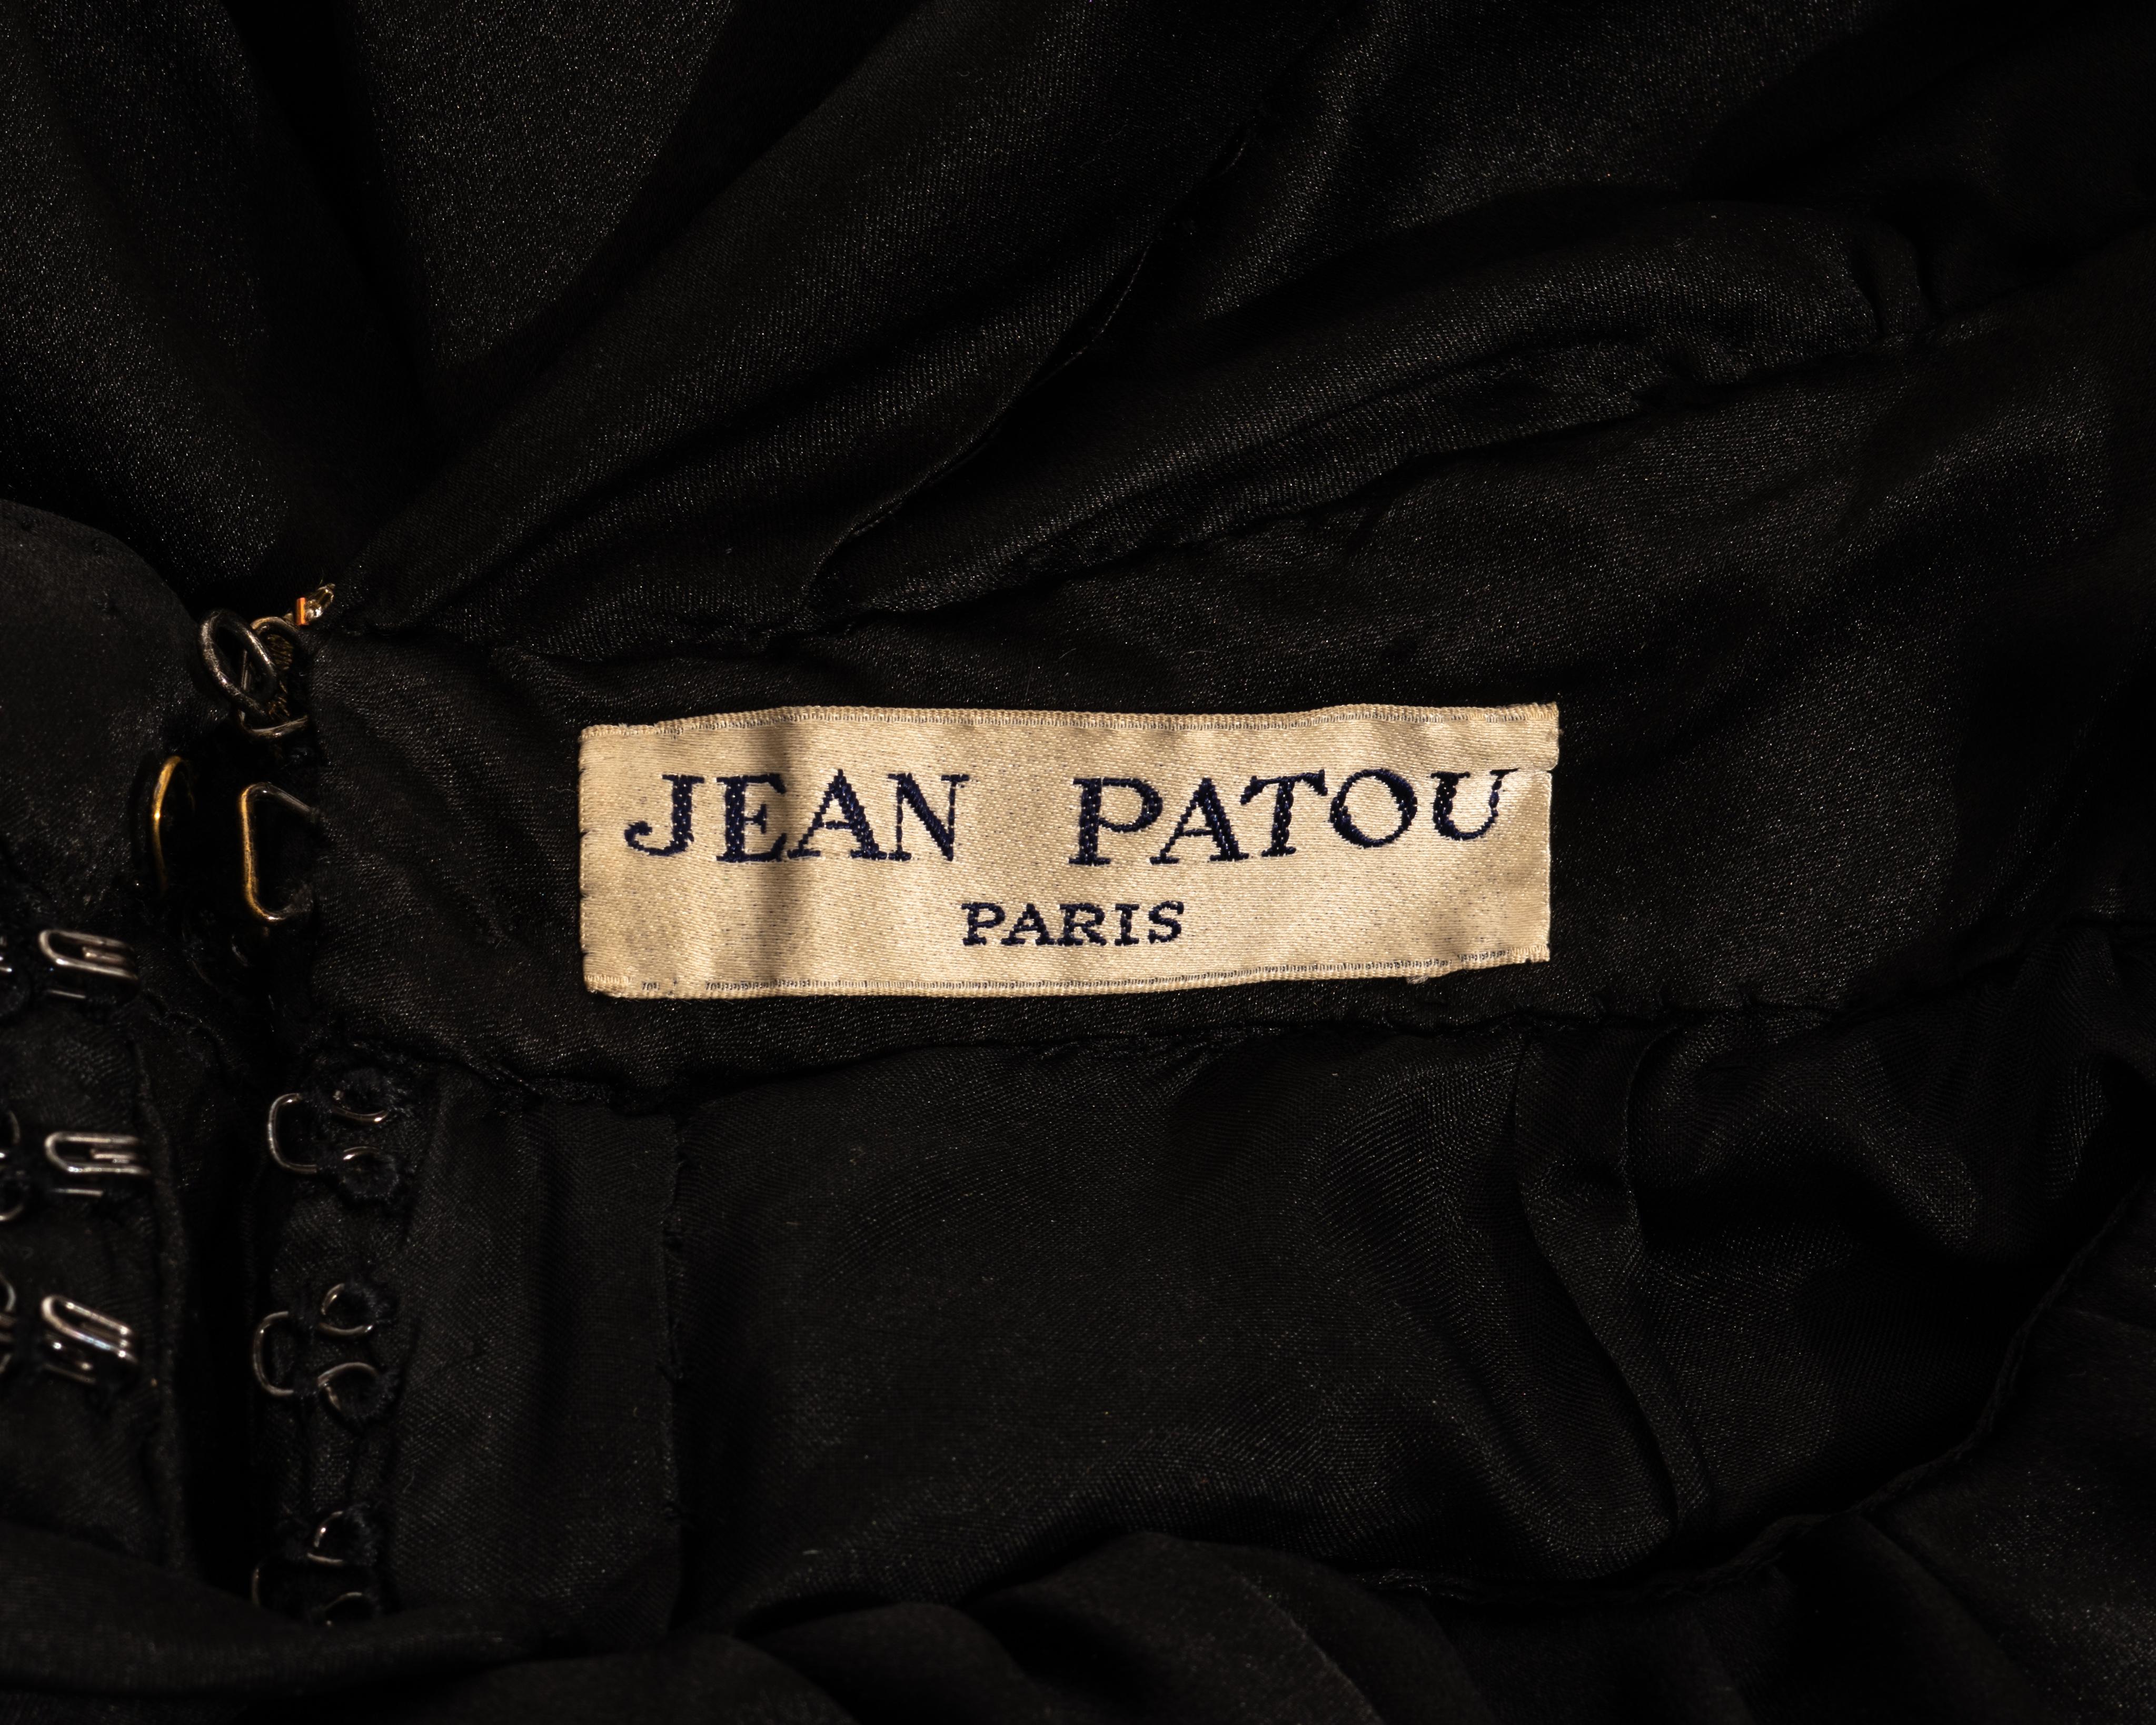 Jean Patou by Christian Lacroix black embellished cocktail dress, fw 1985 5